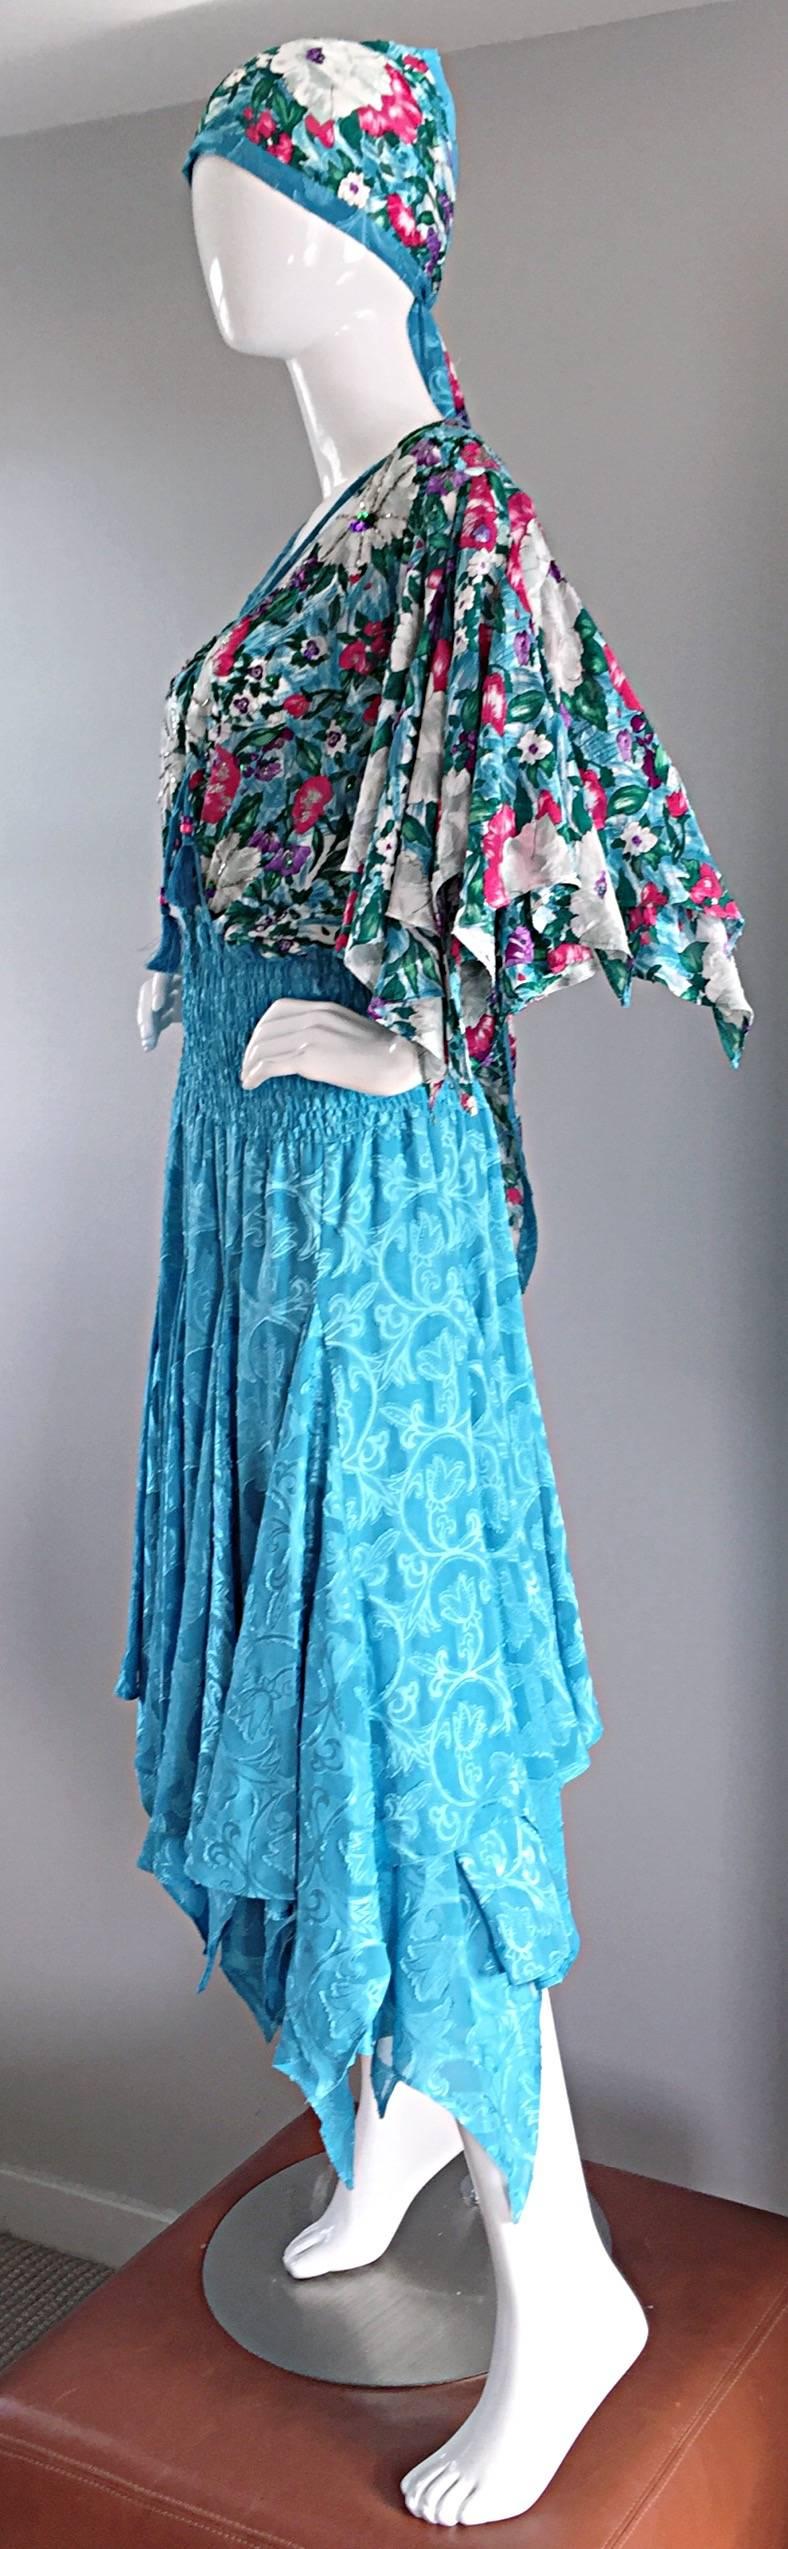 Women's Amazing Vintage Diane Freis Colorful Beaded Boho Dress w/ Head Scarf 